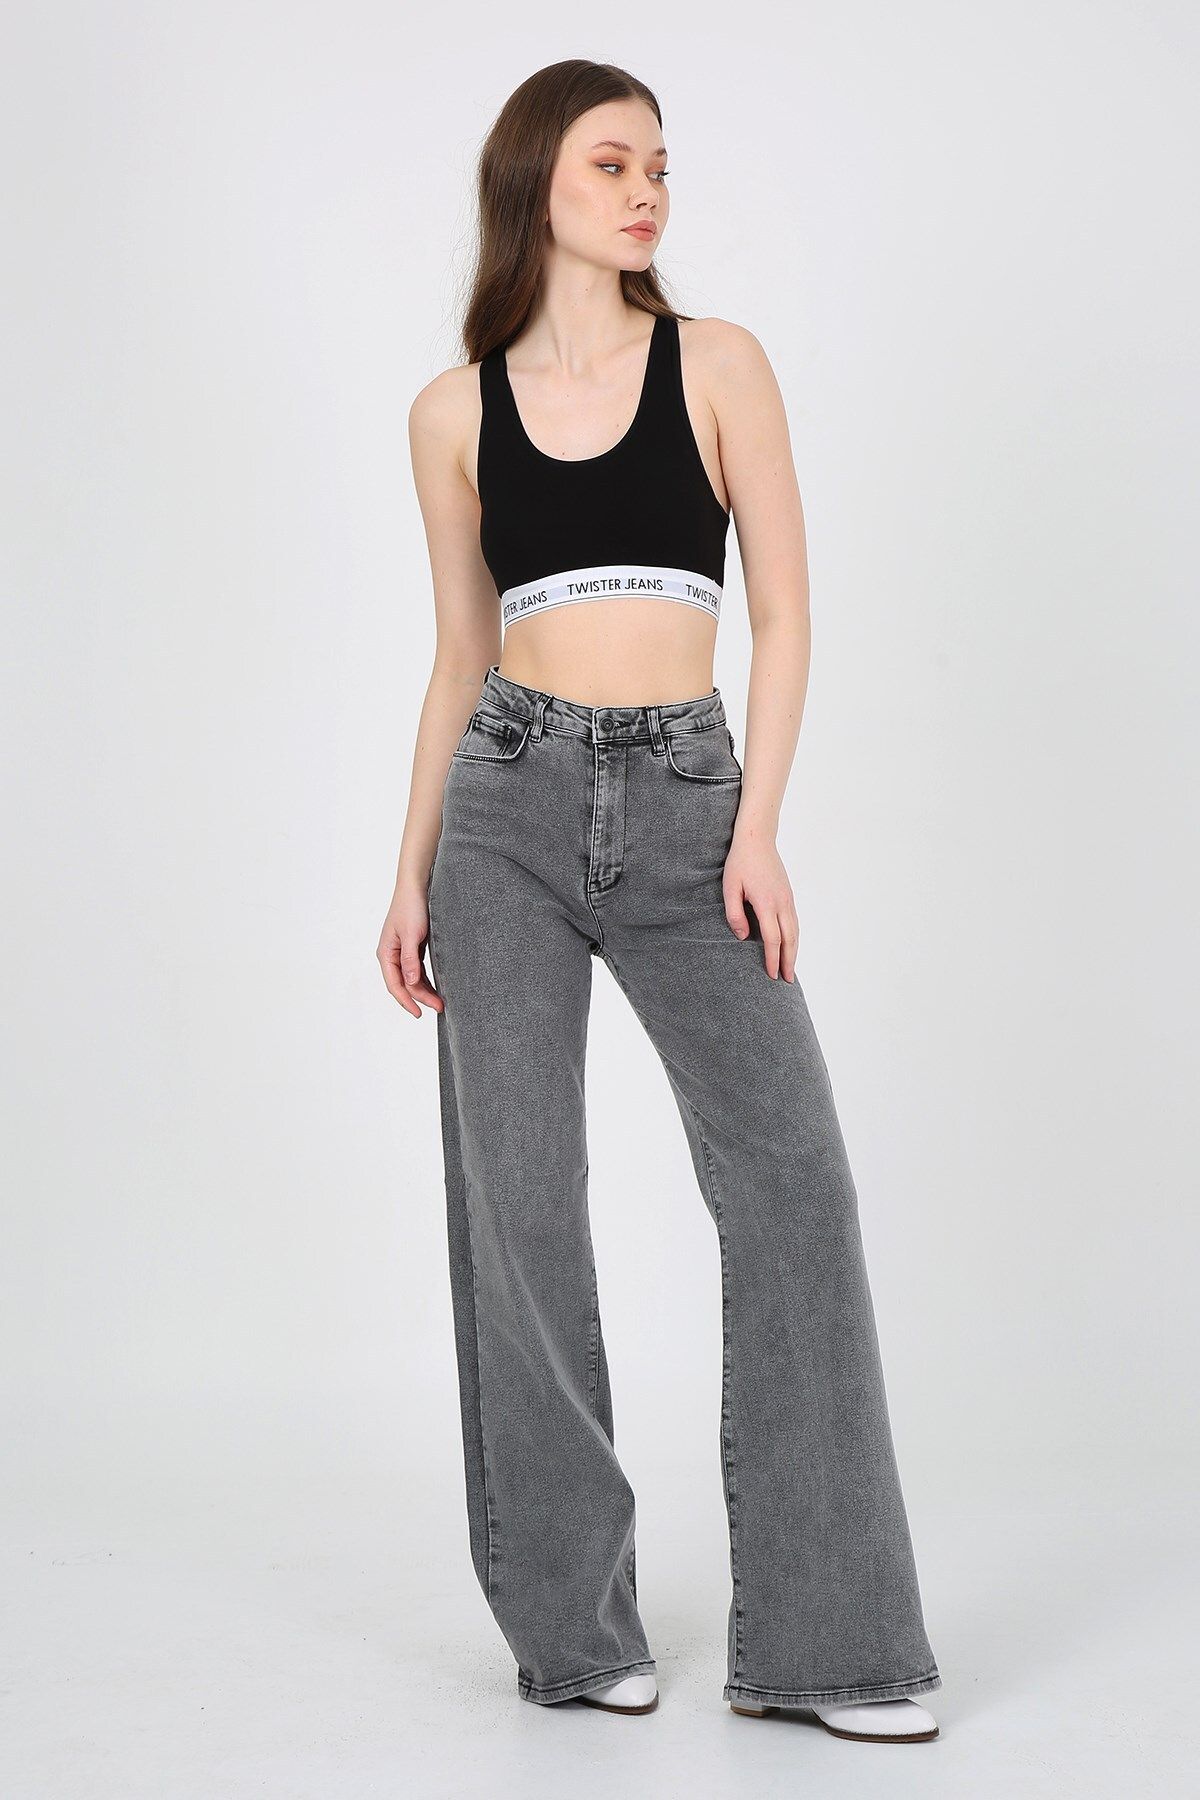 Twister Jeans Kadın Pantolon Asia 9383-10 Grey